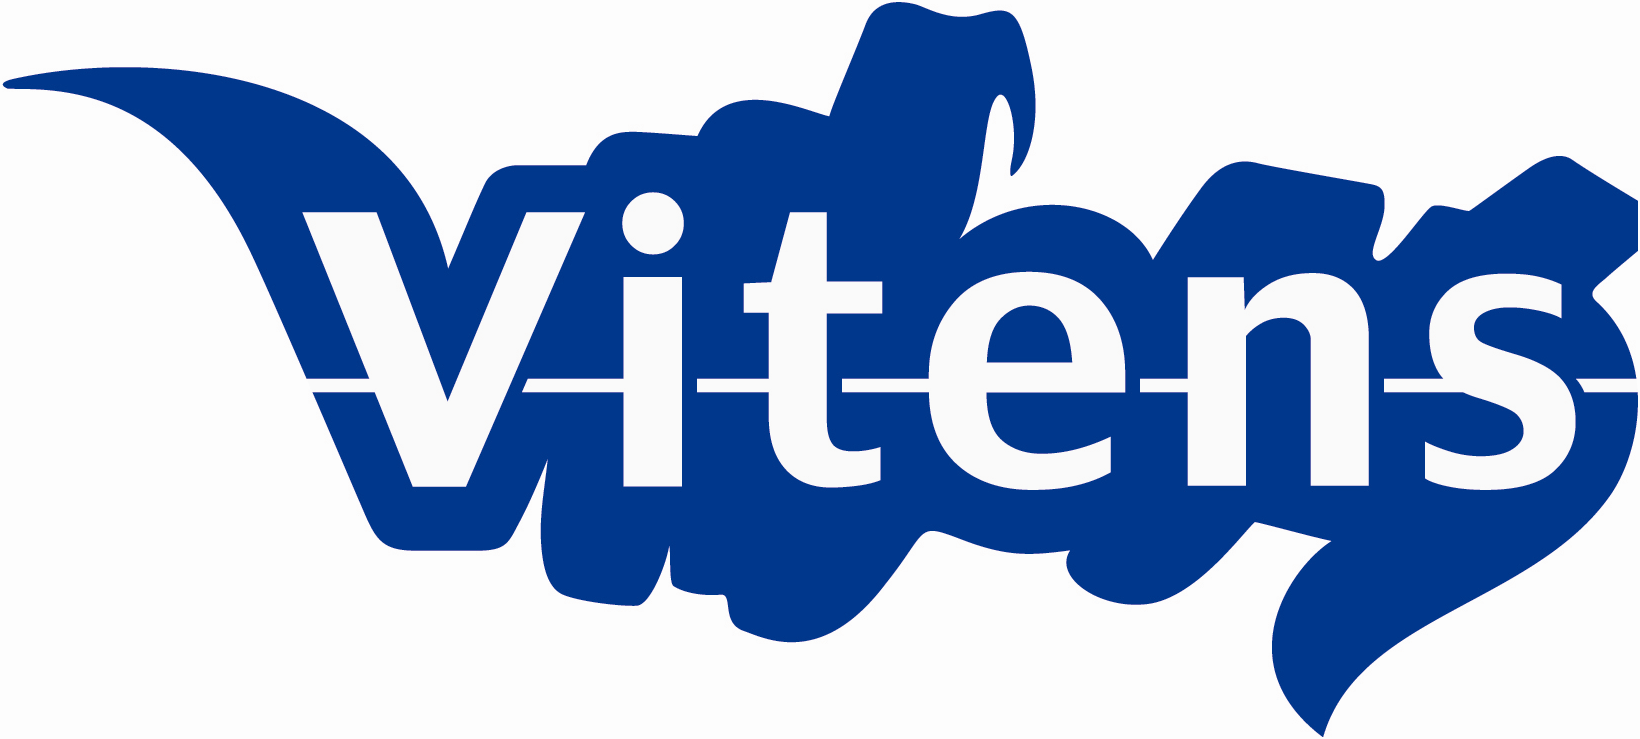 vitens blauw logo